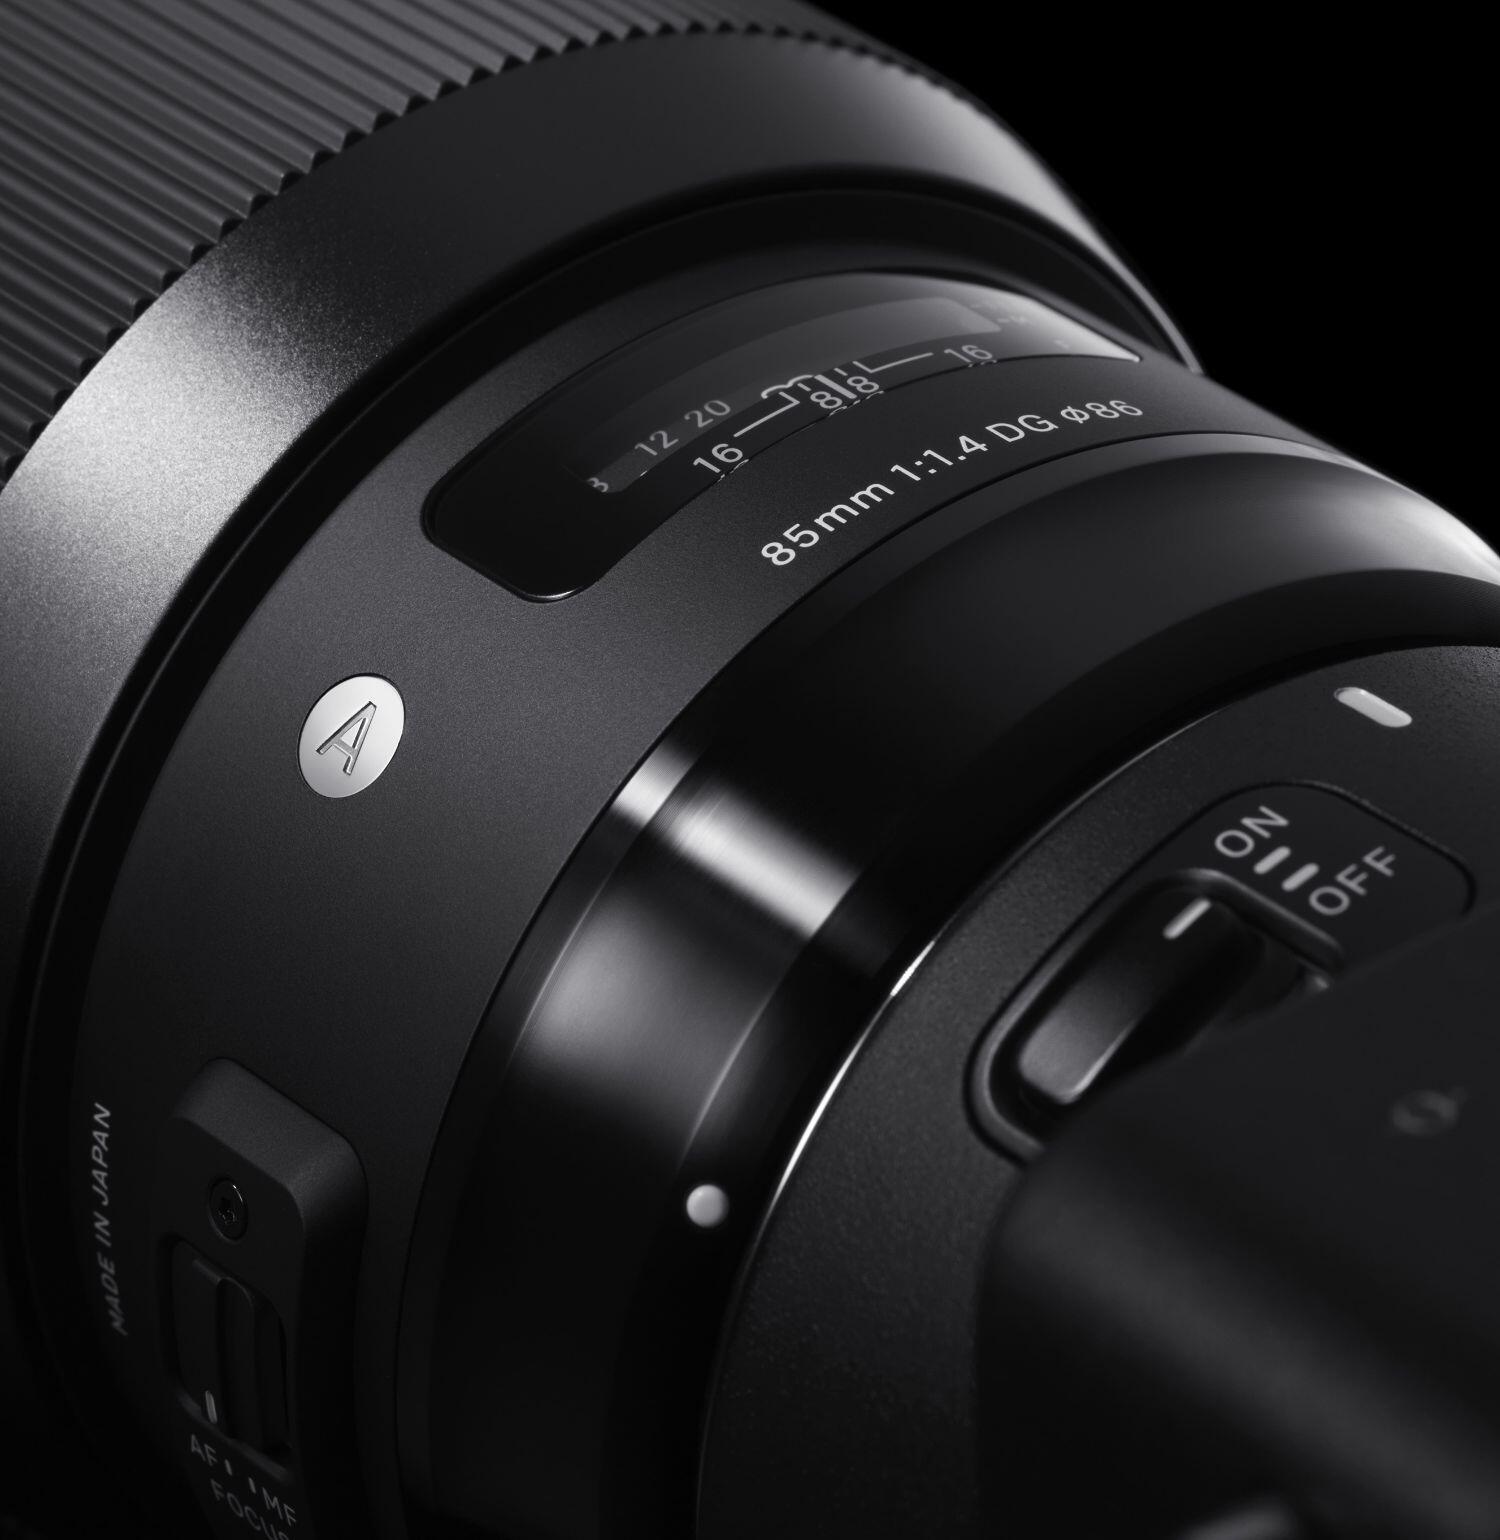 Sigma 85mm f1.4 DG HSM Art Lens for Canon EF